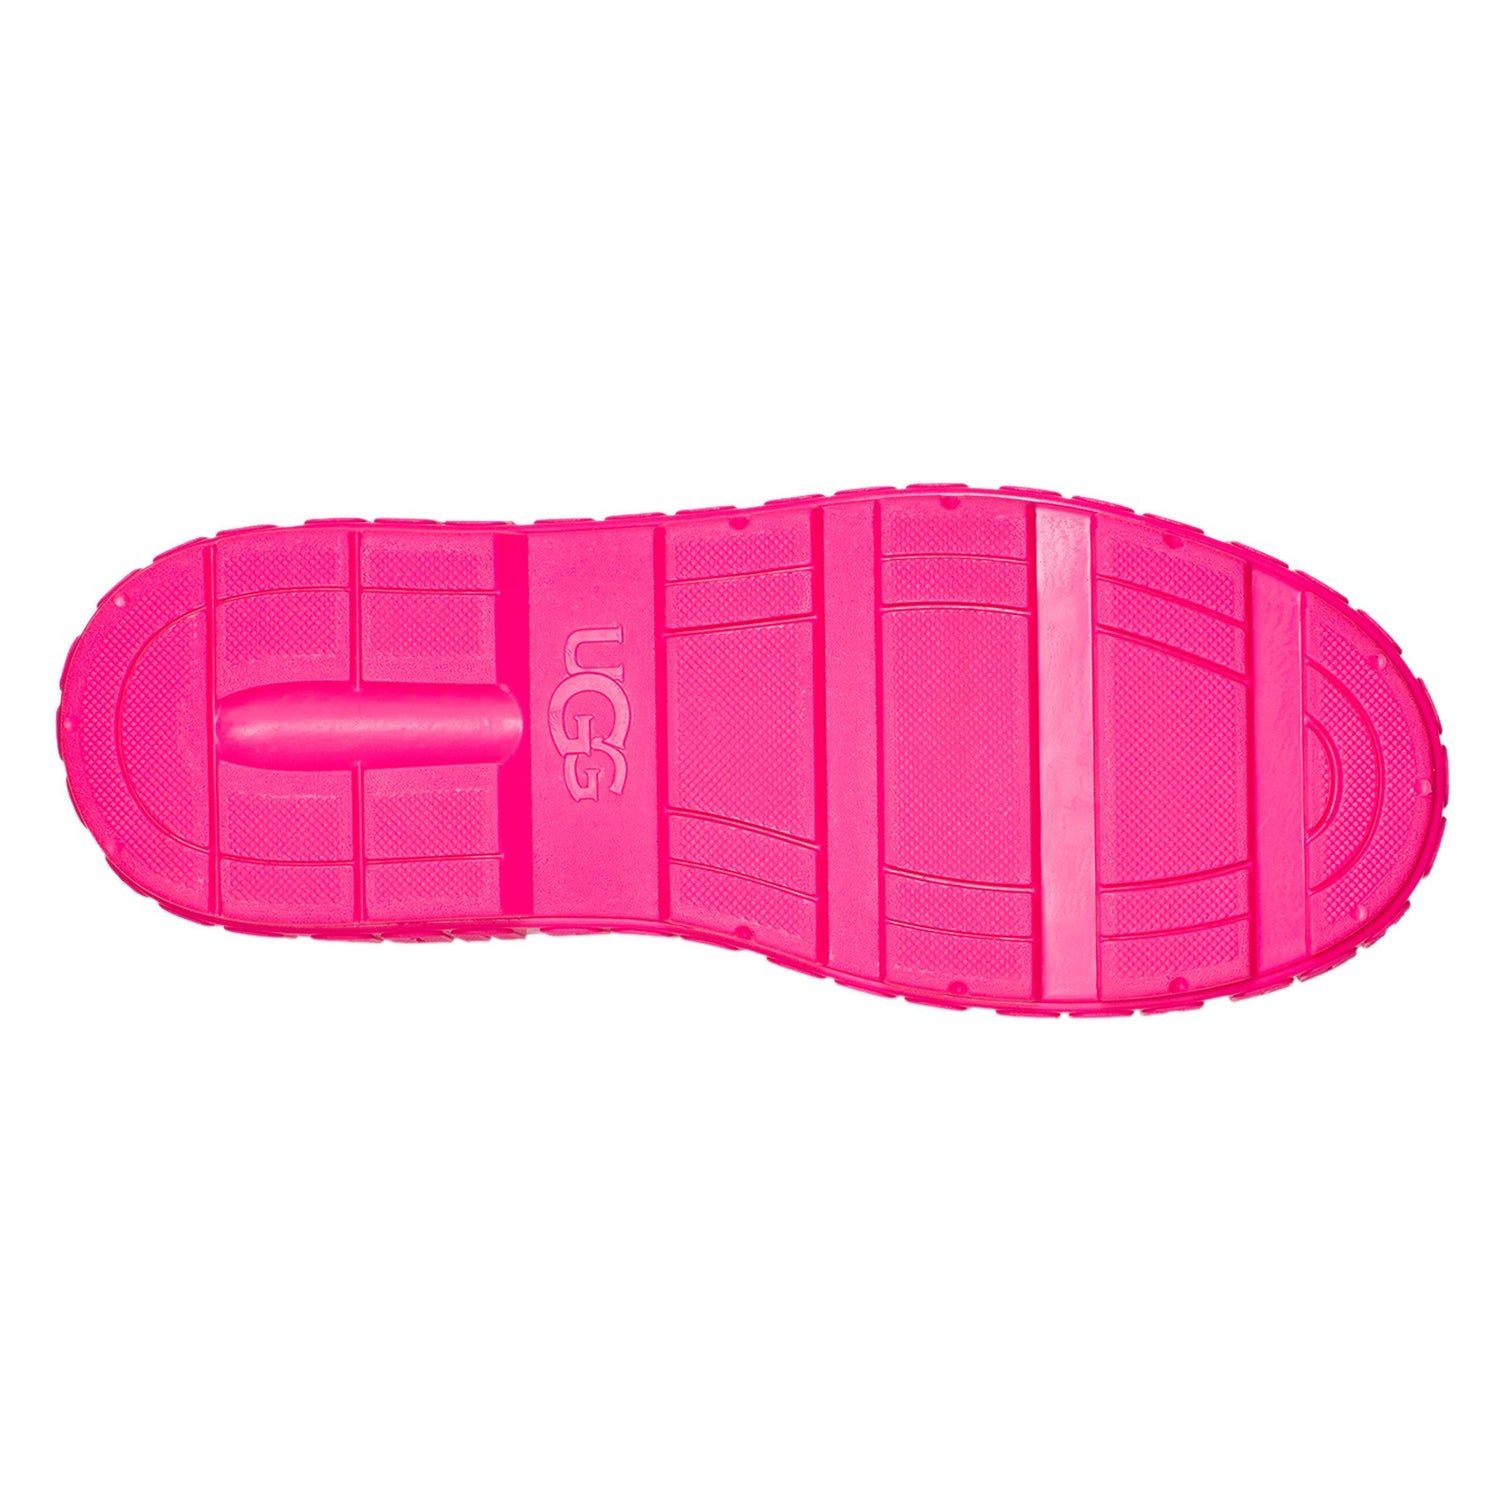 Peltz Shoes  Women's UGG Drizlita Rain Boot TAFFY 1125731-TYPN